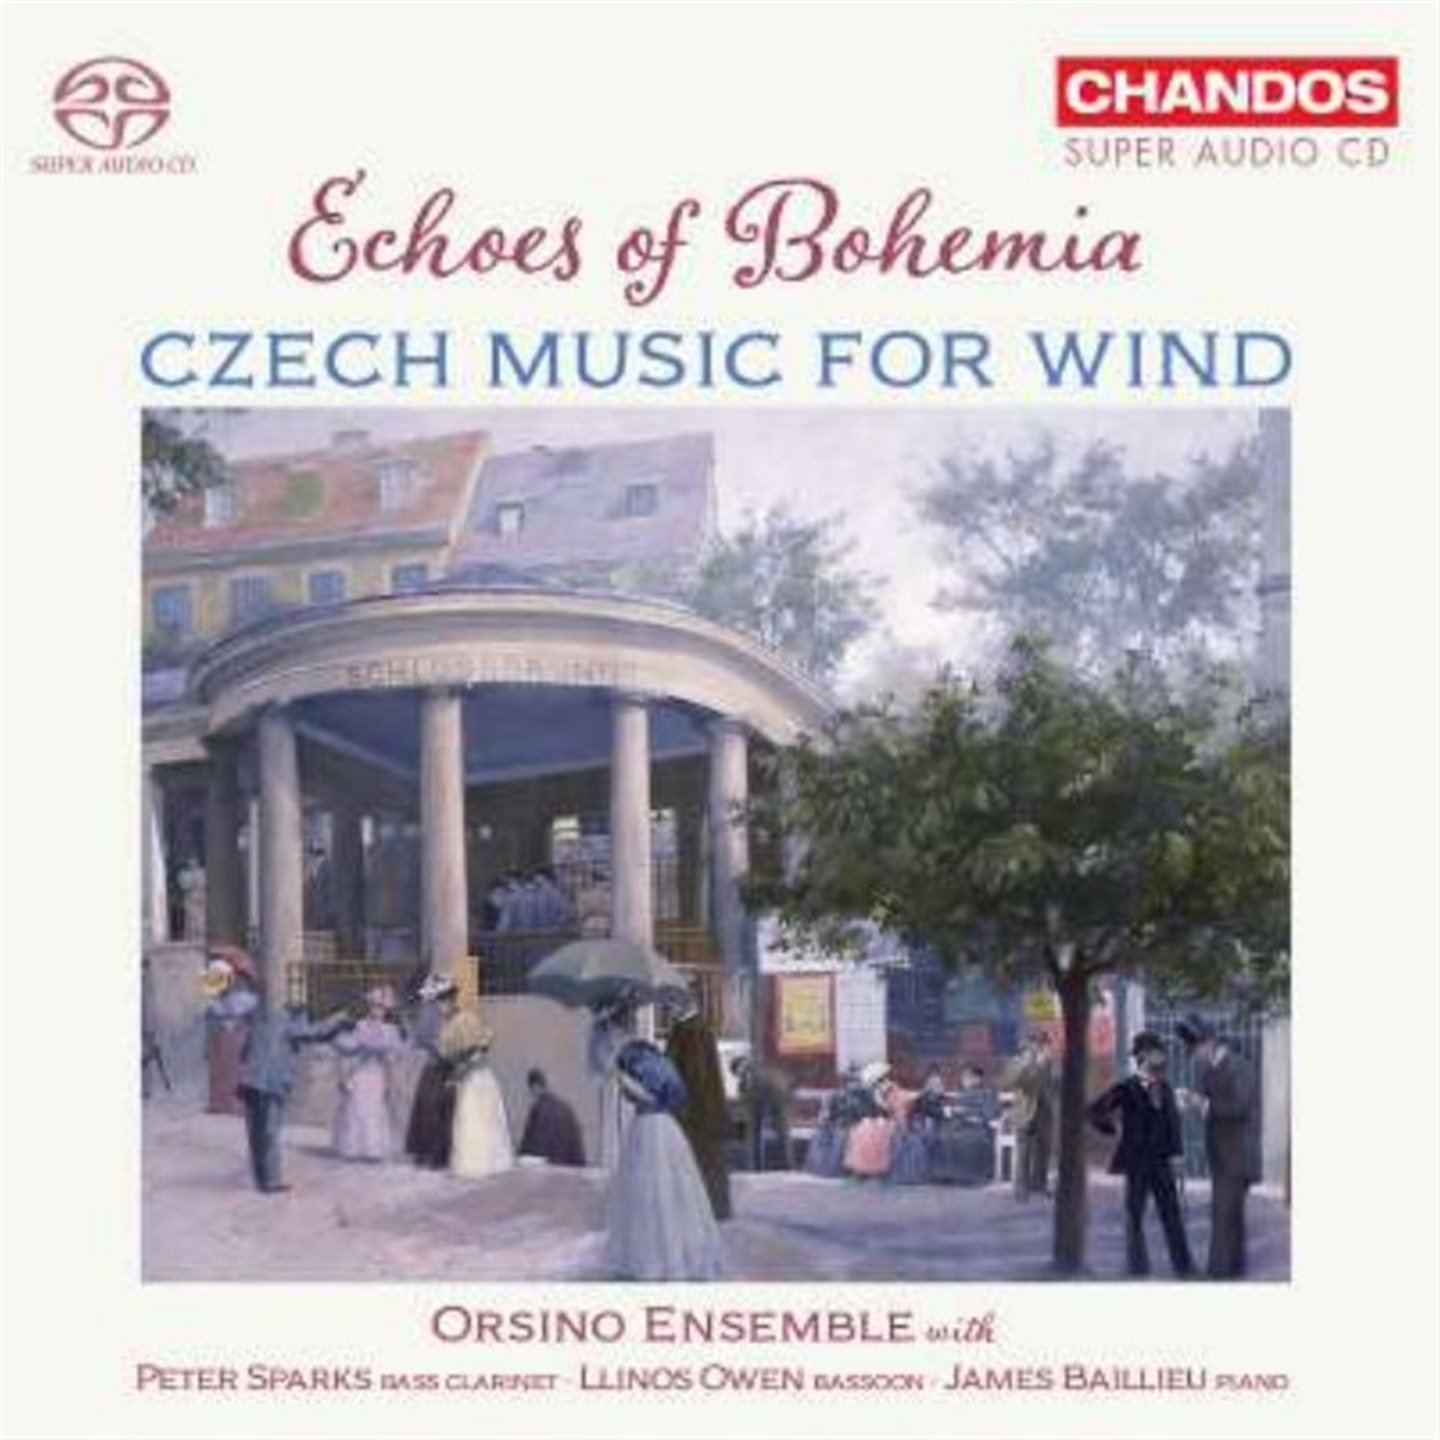 CD Shop - ORSINO ENSEMBLE Echoes of Bohemia